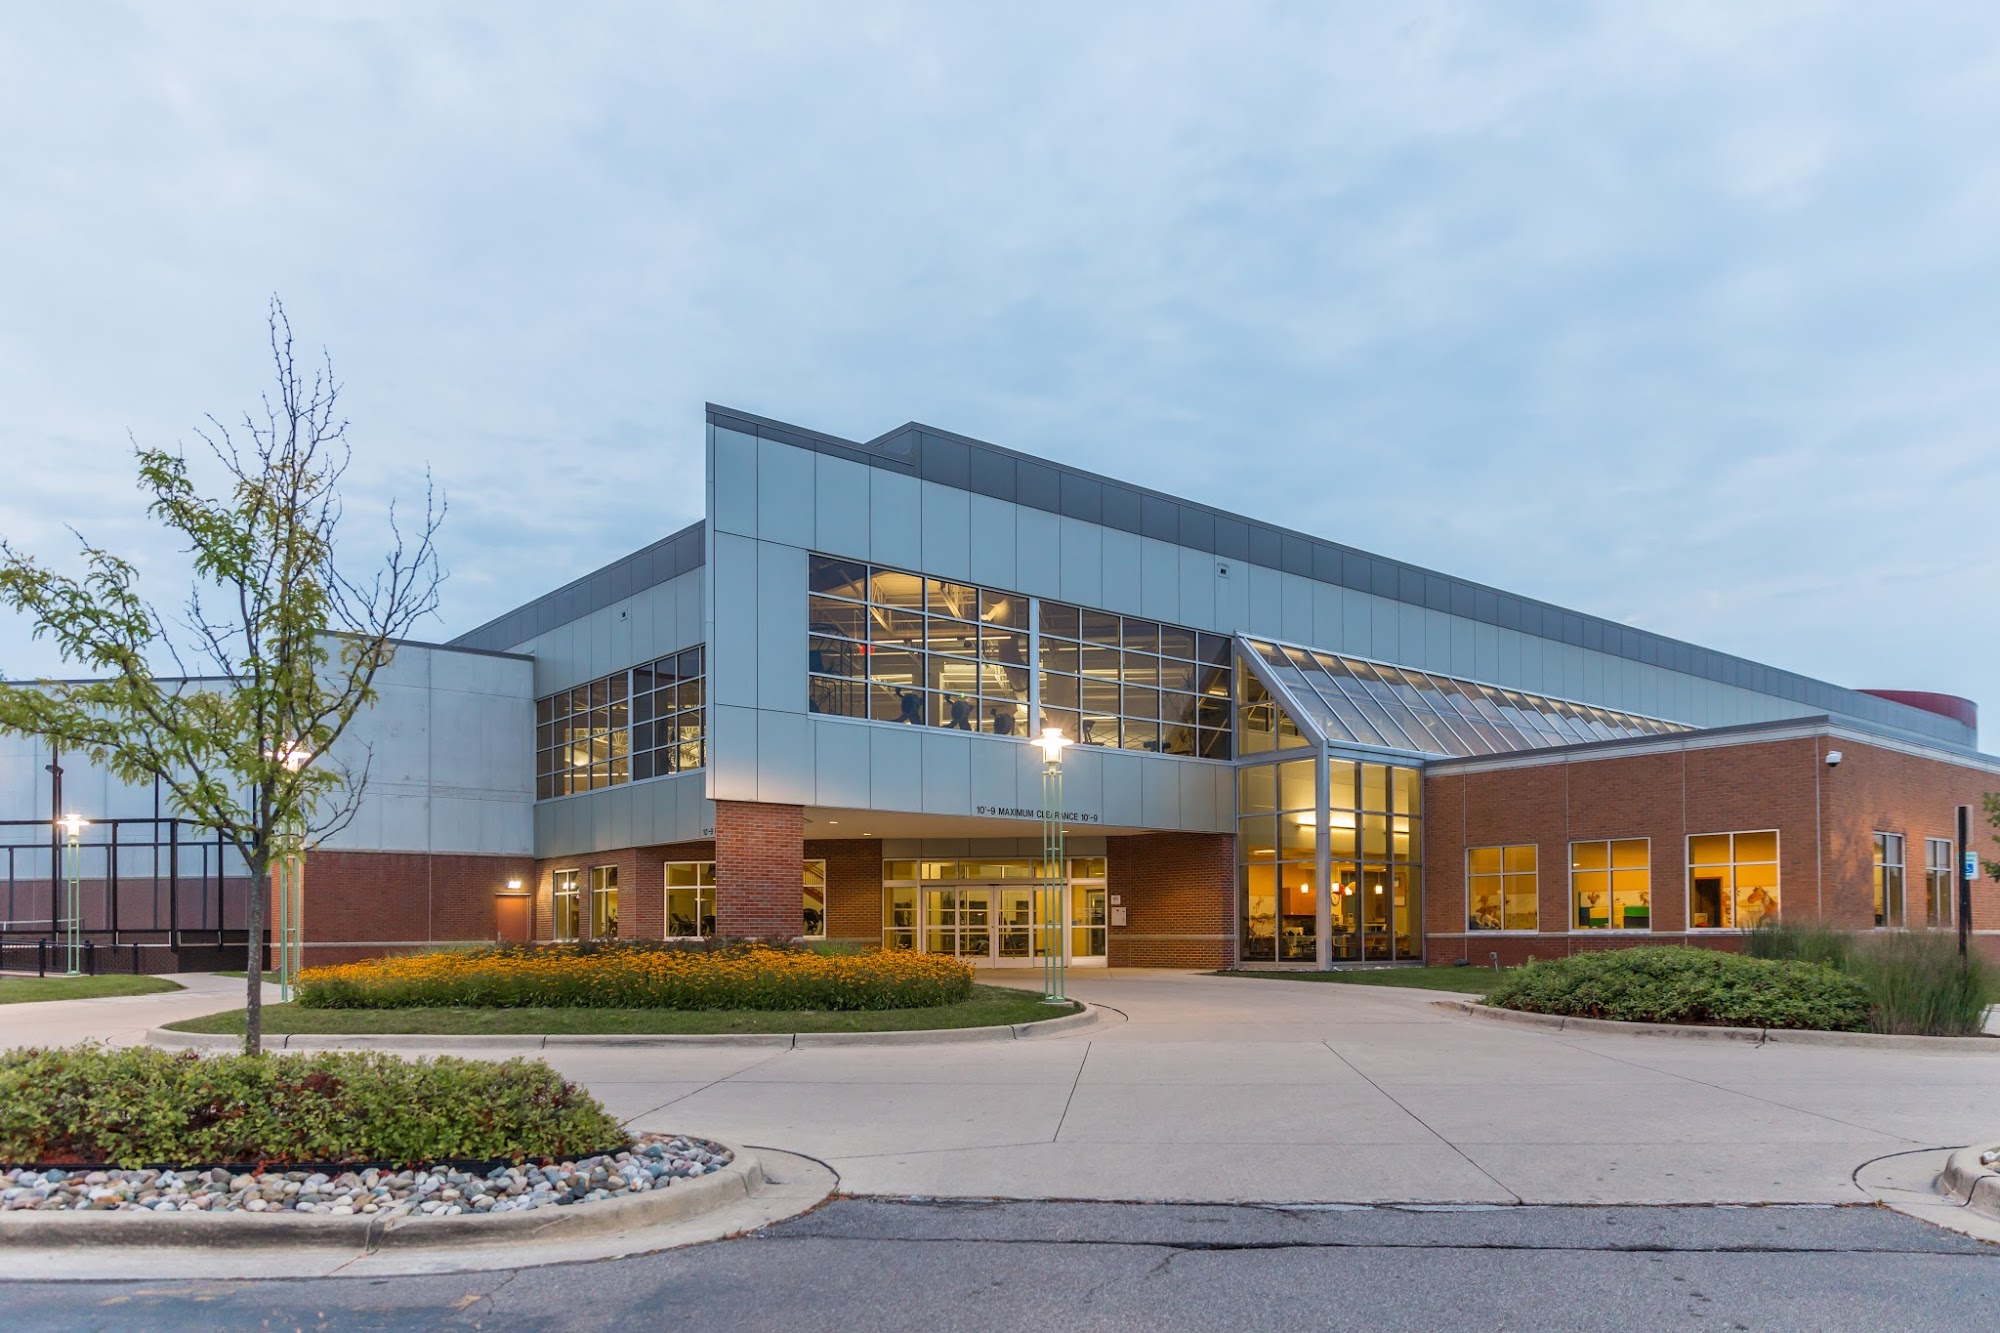 The Health & Fitness Center at Washtenaw Community College